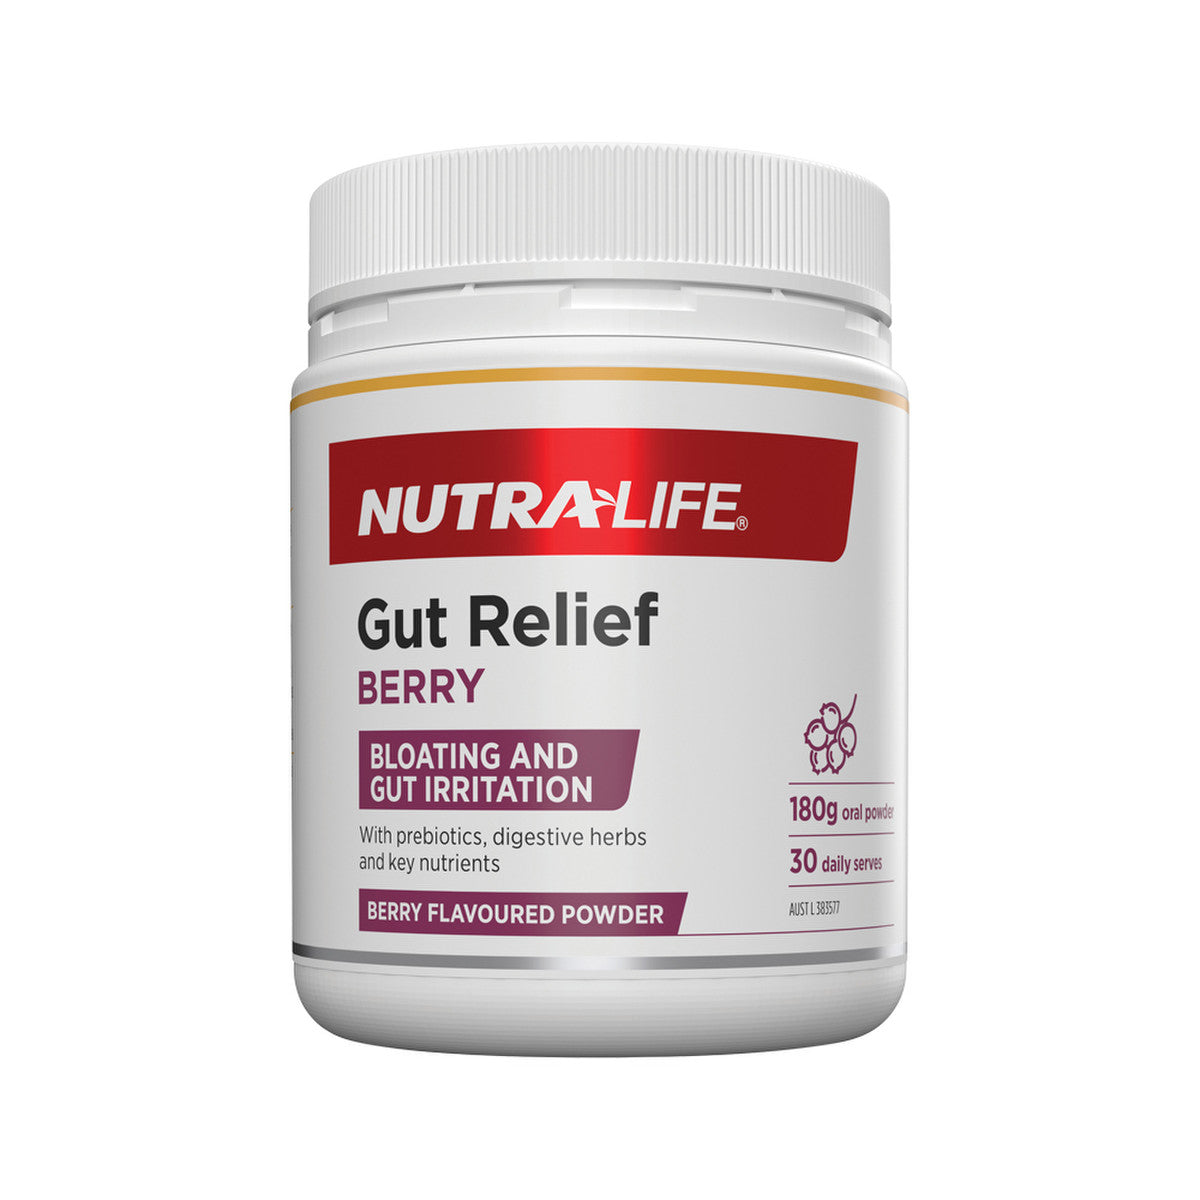 NutraLife - Gut Relief Berry Oral Powder